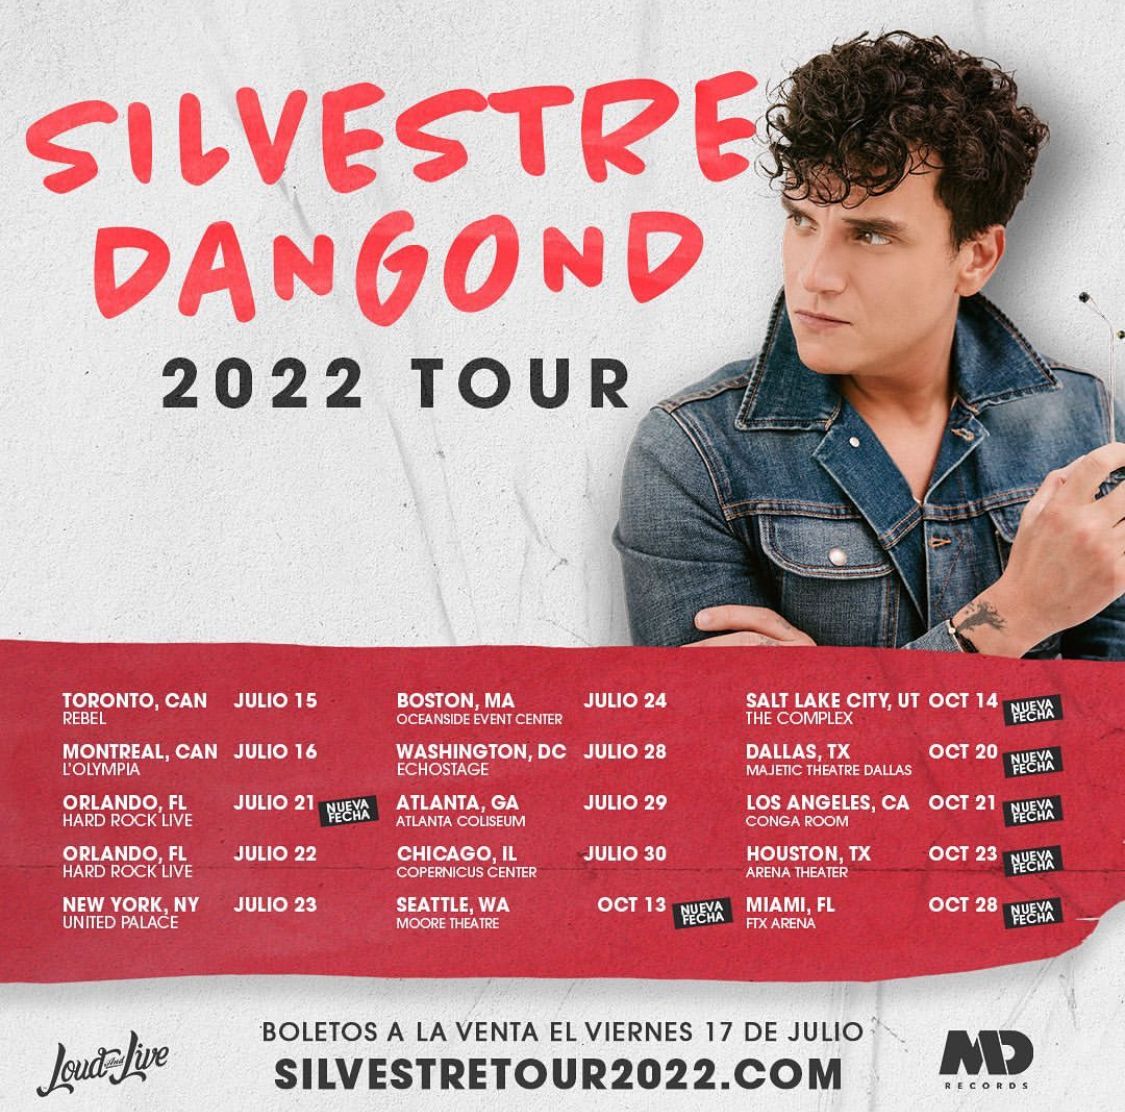 SILVESTRE DANGOND anuncia fechas de su "2022 Tour" Wow La Revista